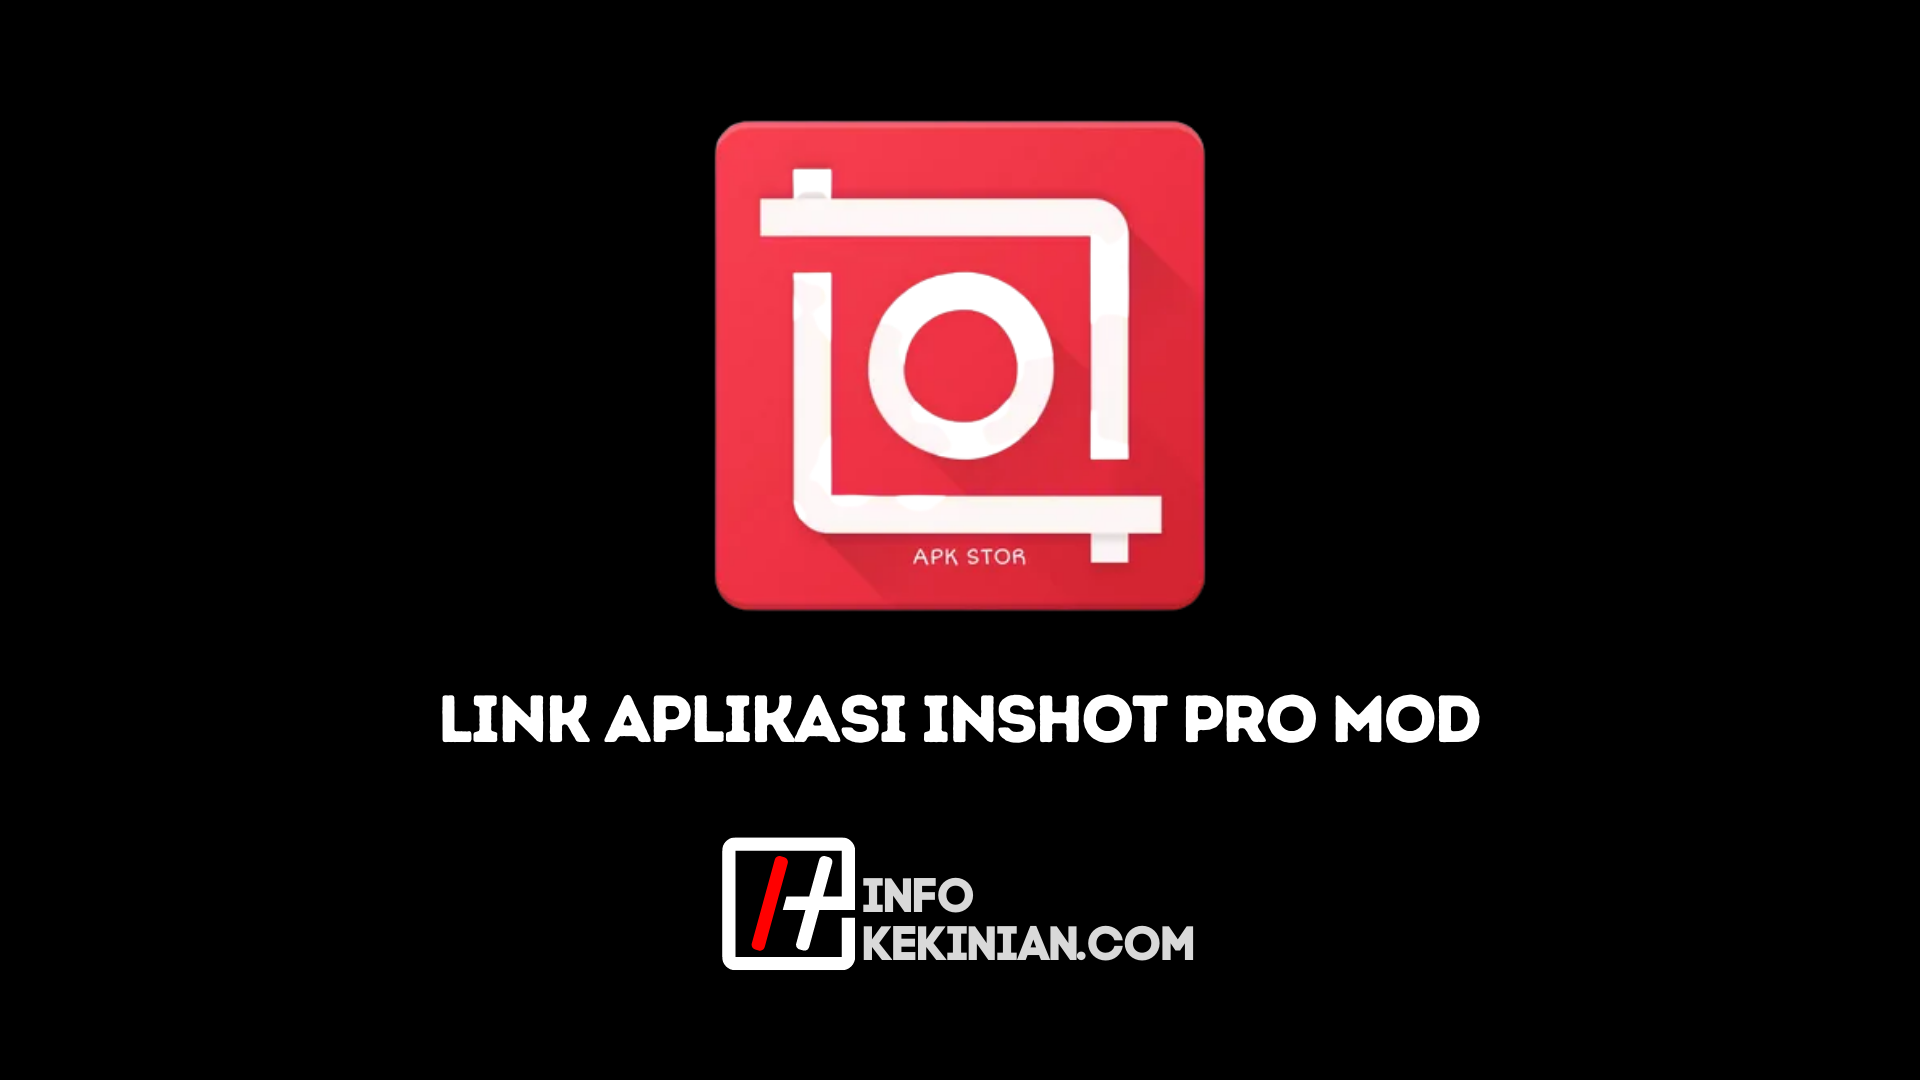 ¿Qué es Inshot Pro Mod APK_?